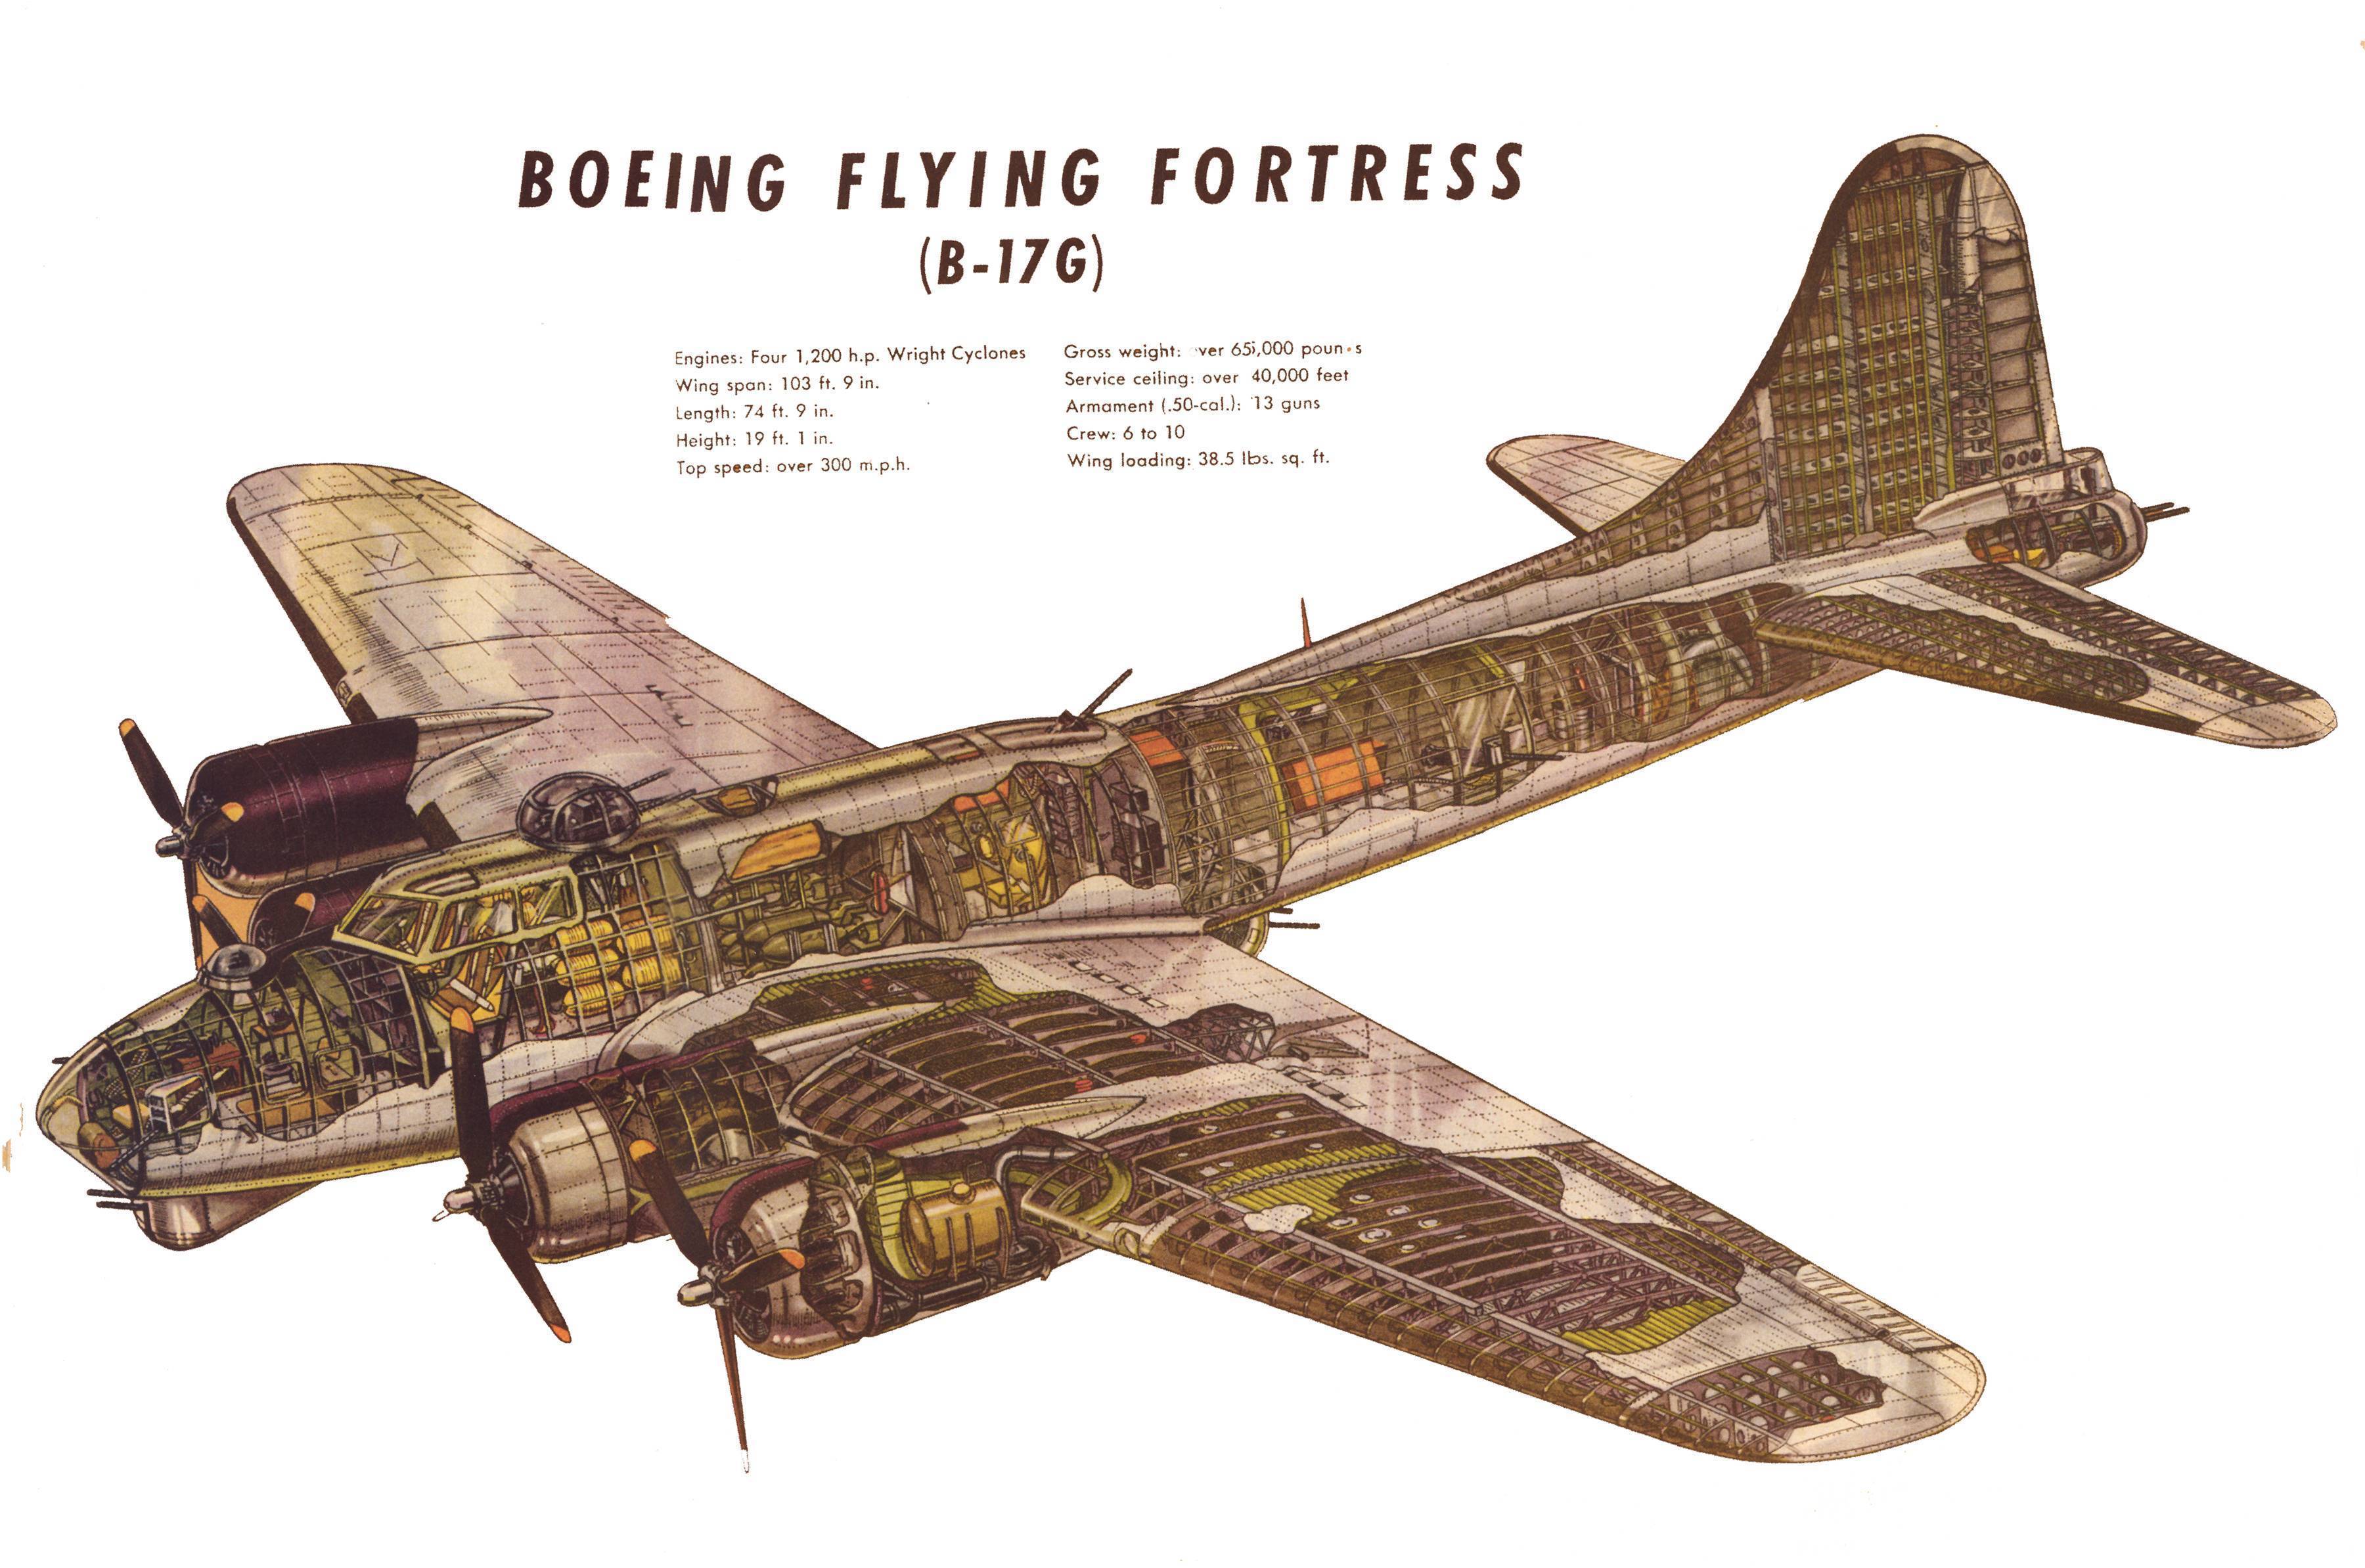 B-29 superfortress